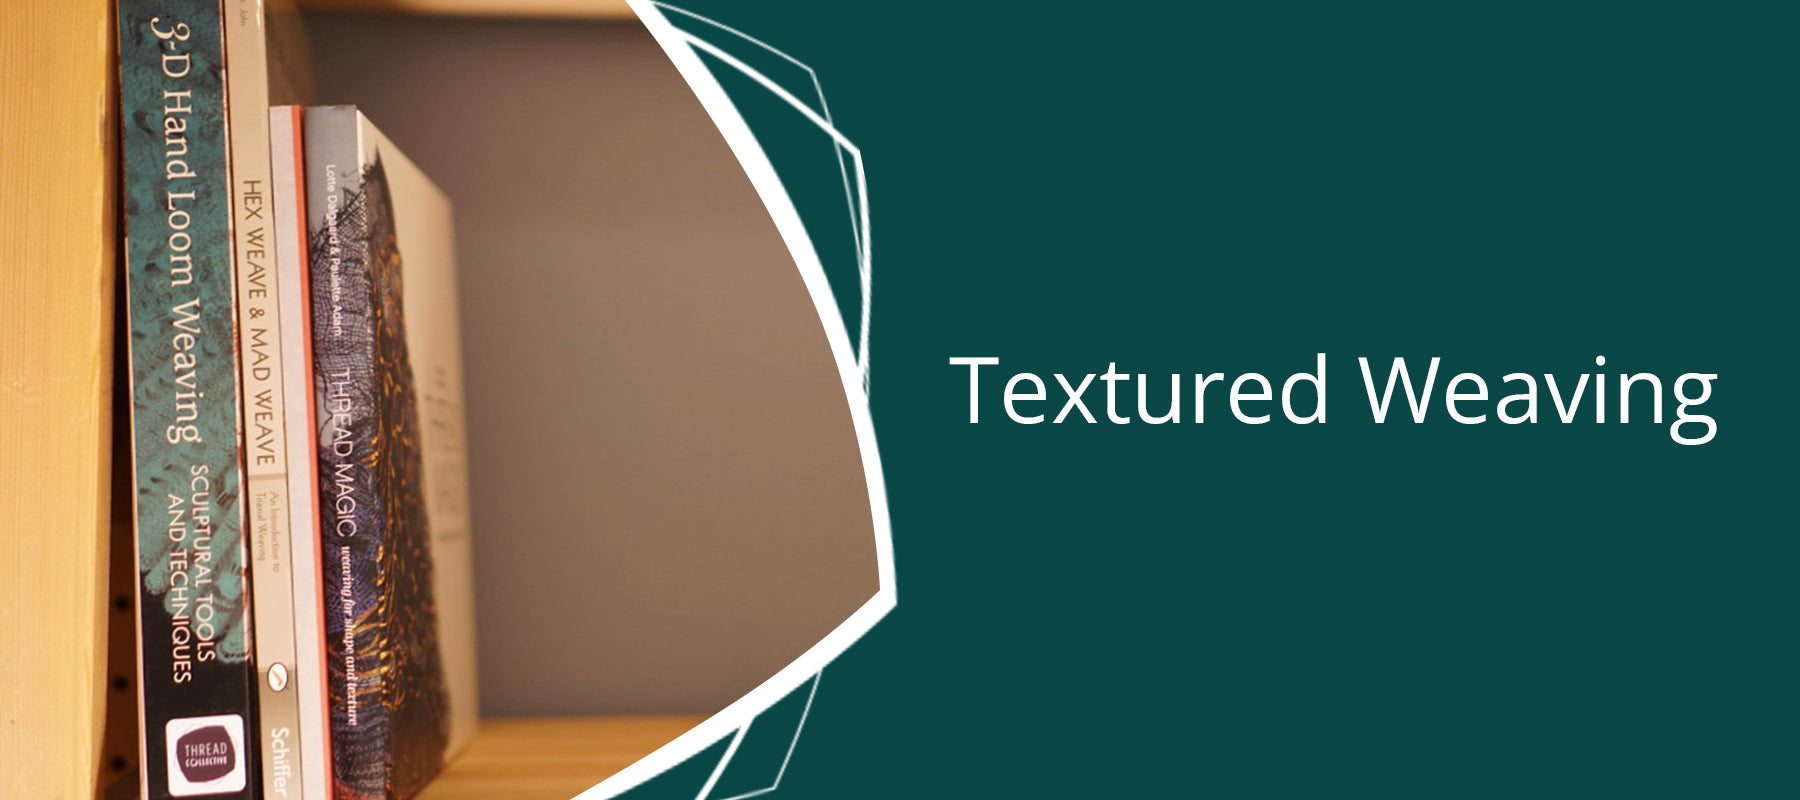 Textured Weaving Books - Thread Collective Australia